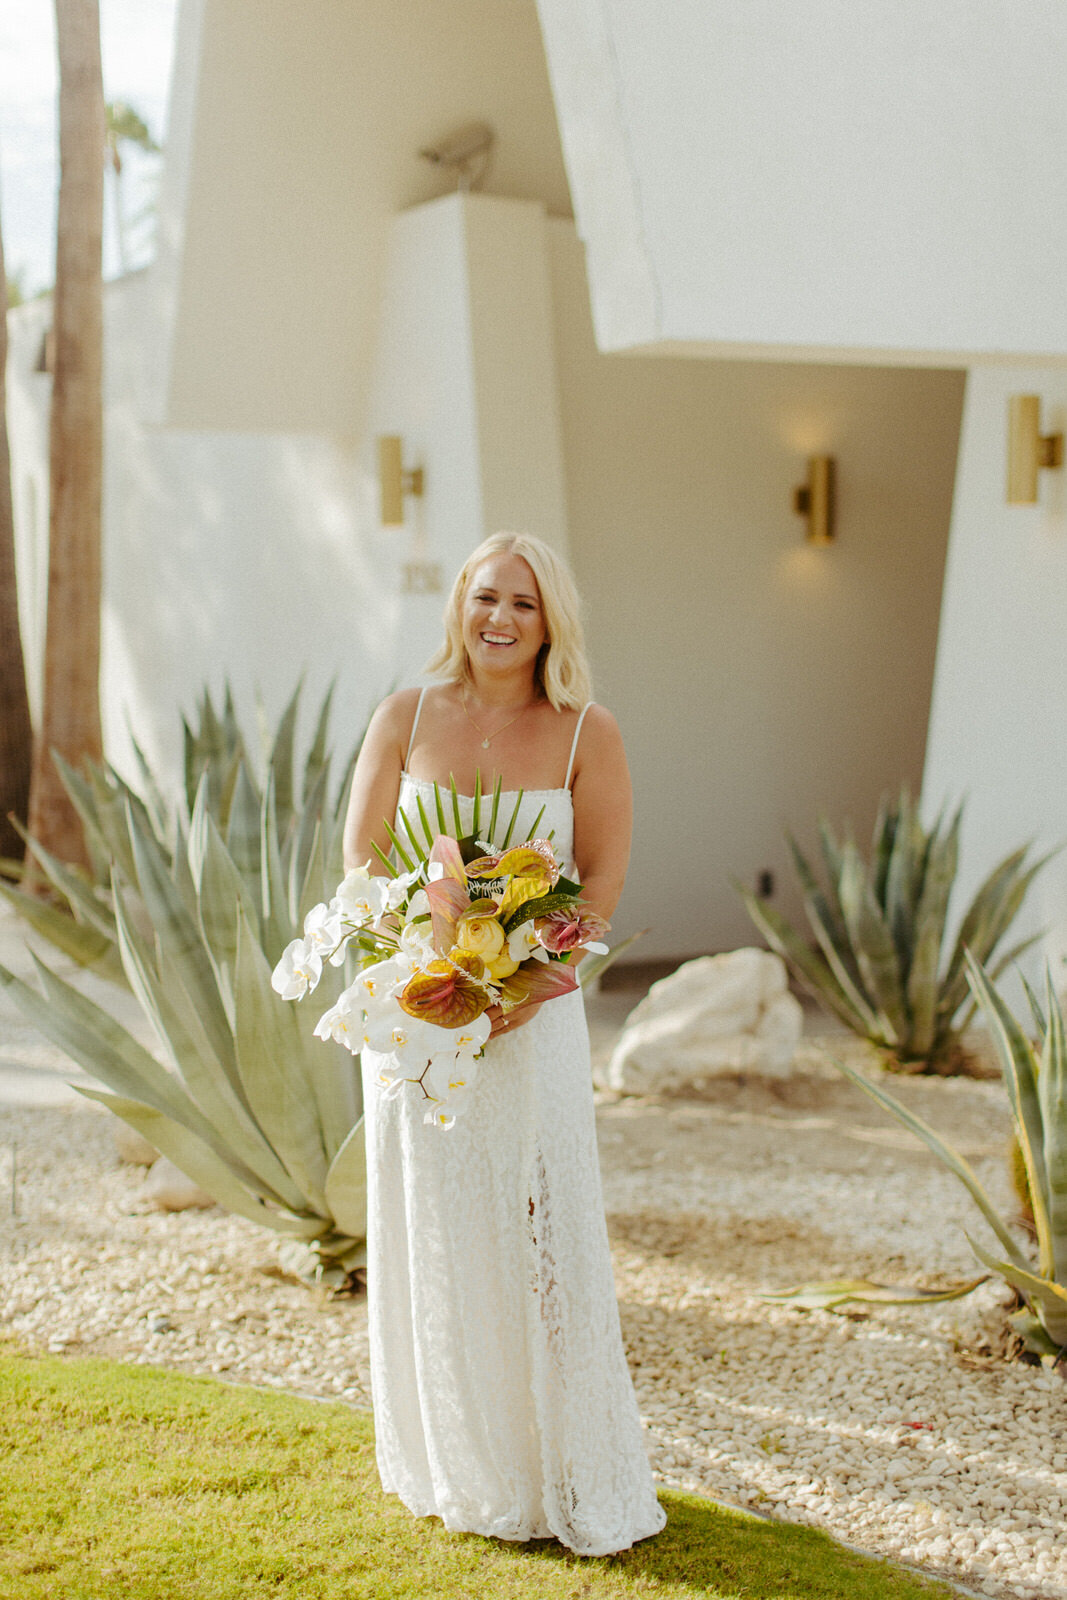 Brianna-Broyles-Photography-COVID-Backyard-Wedding-Palm-Springs-Portraits-11.jpg